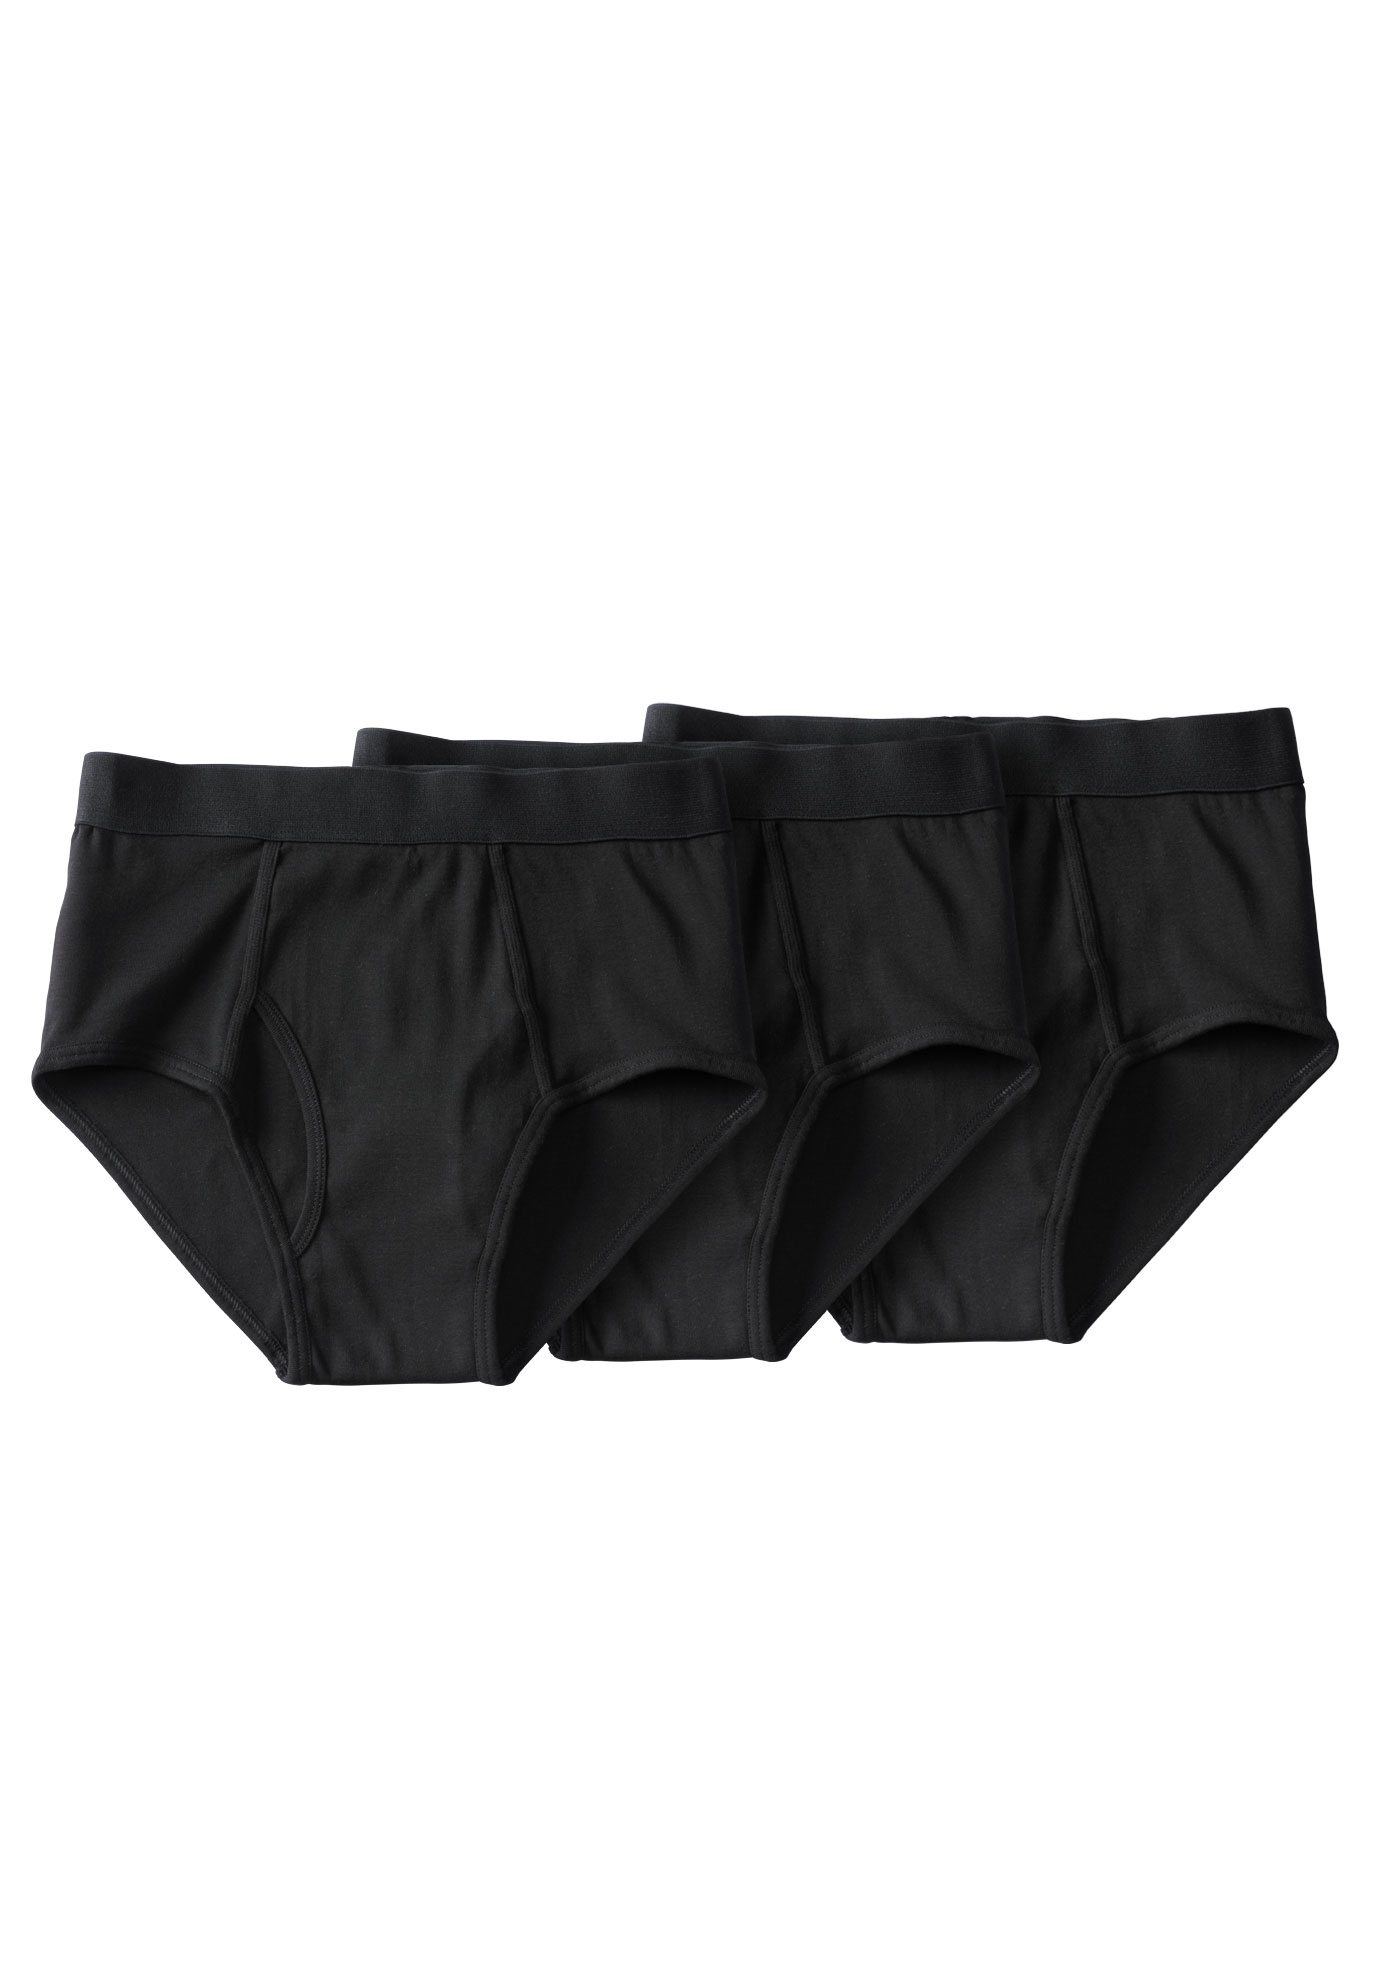 KingSize Mens Big /& Tall Classic Cotton Briefs 3-Pack Underwear